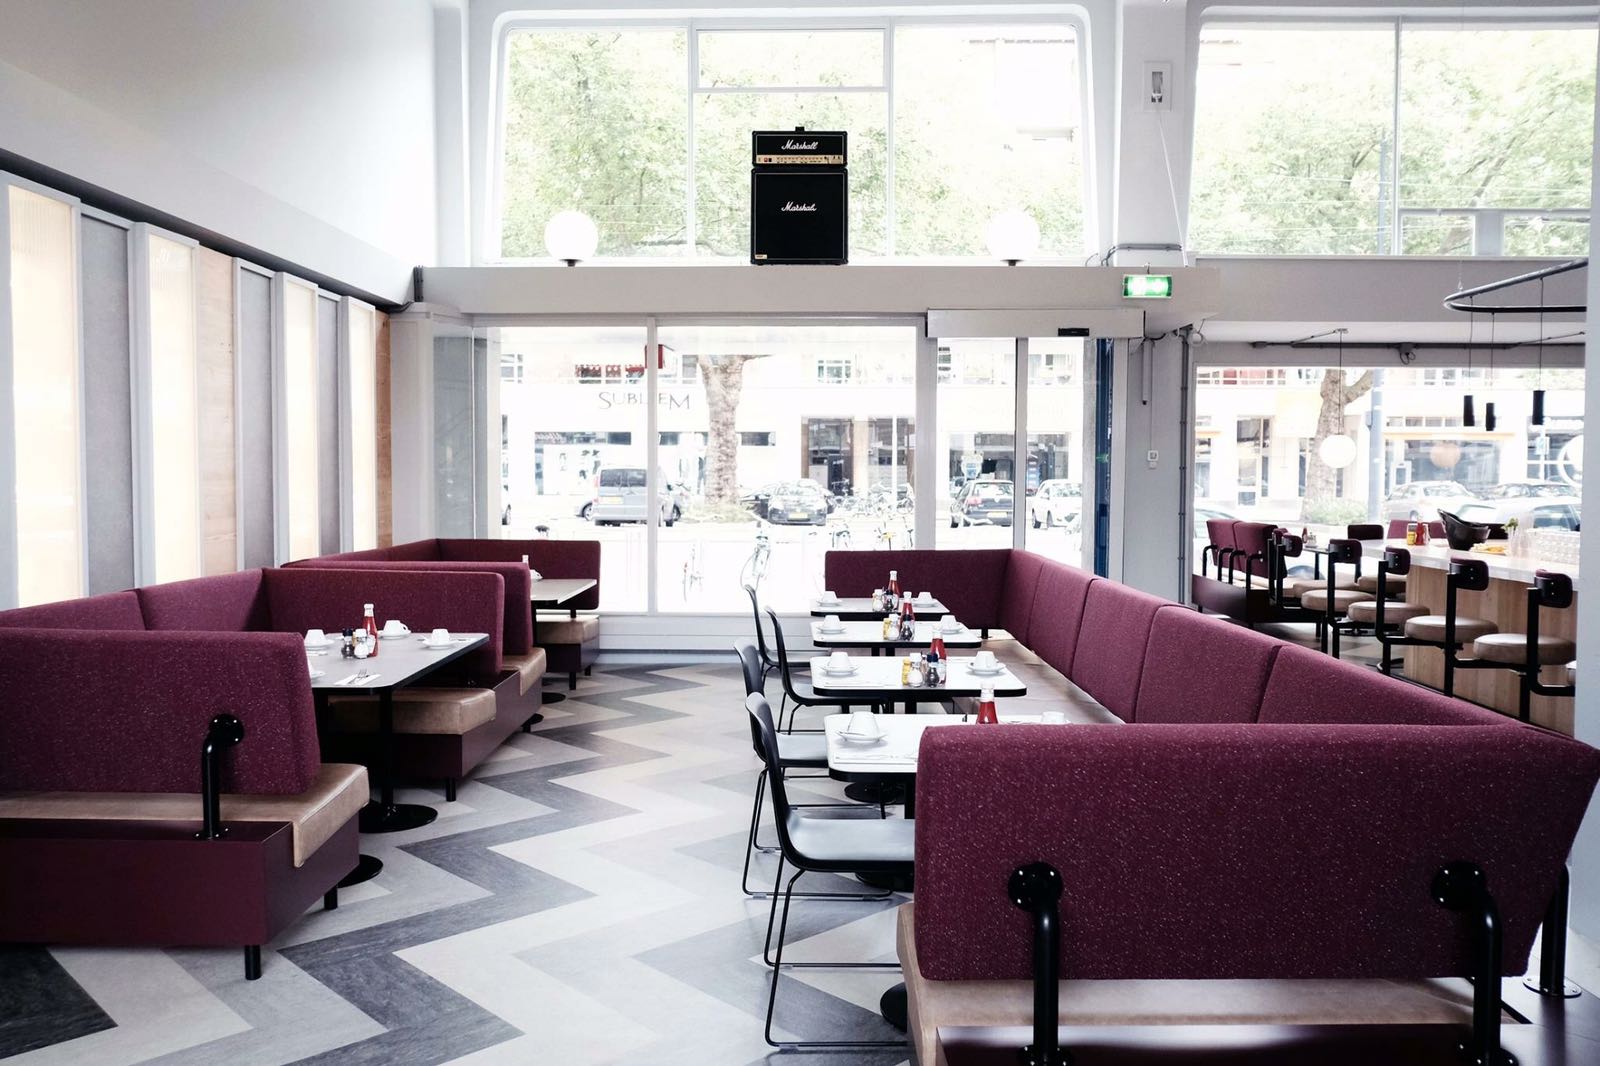 Foto : Rotterdamse ‘diner’ knipoogt
niet alle